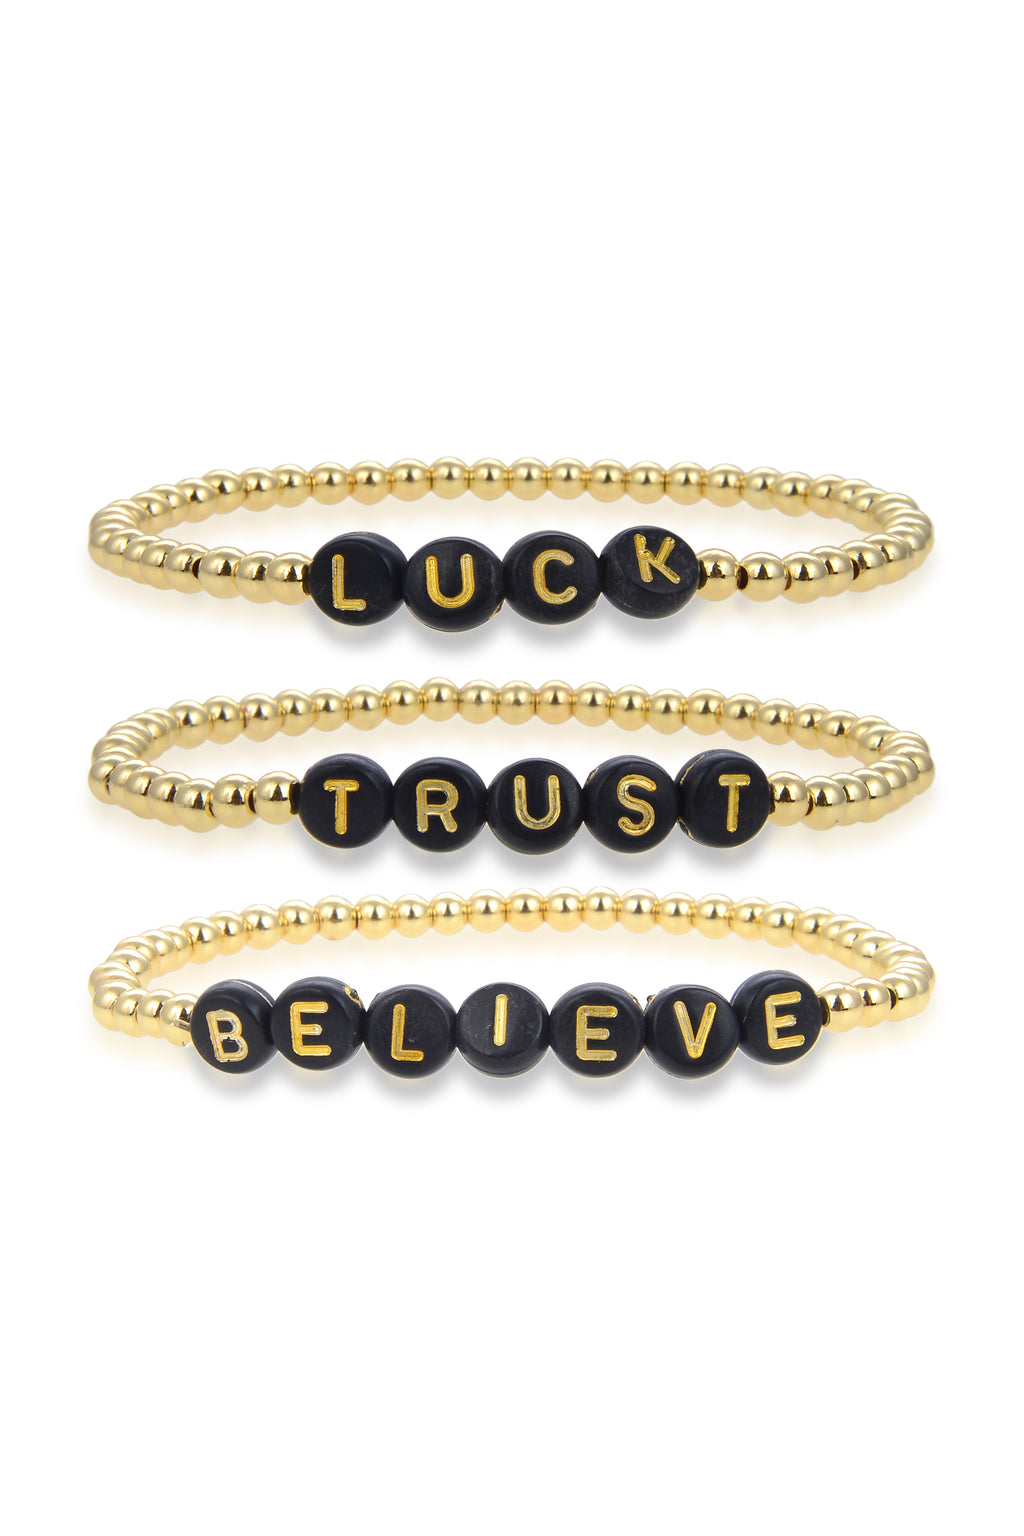 Believe, trust, luck beaded bracelet set.